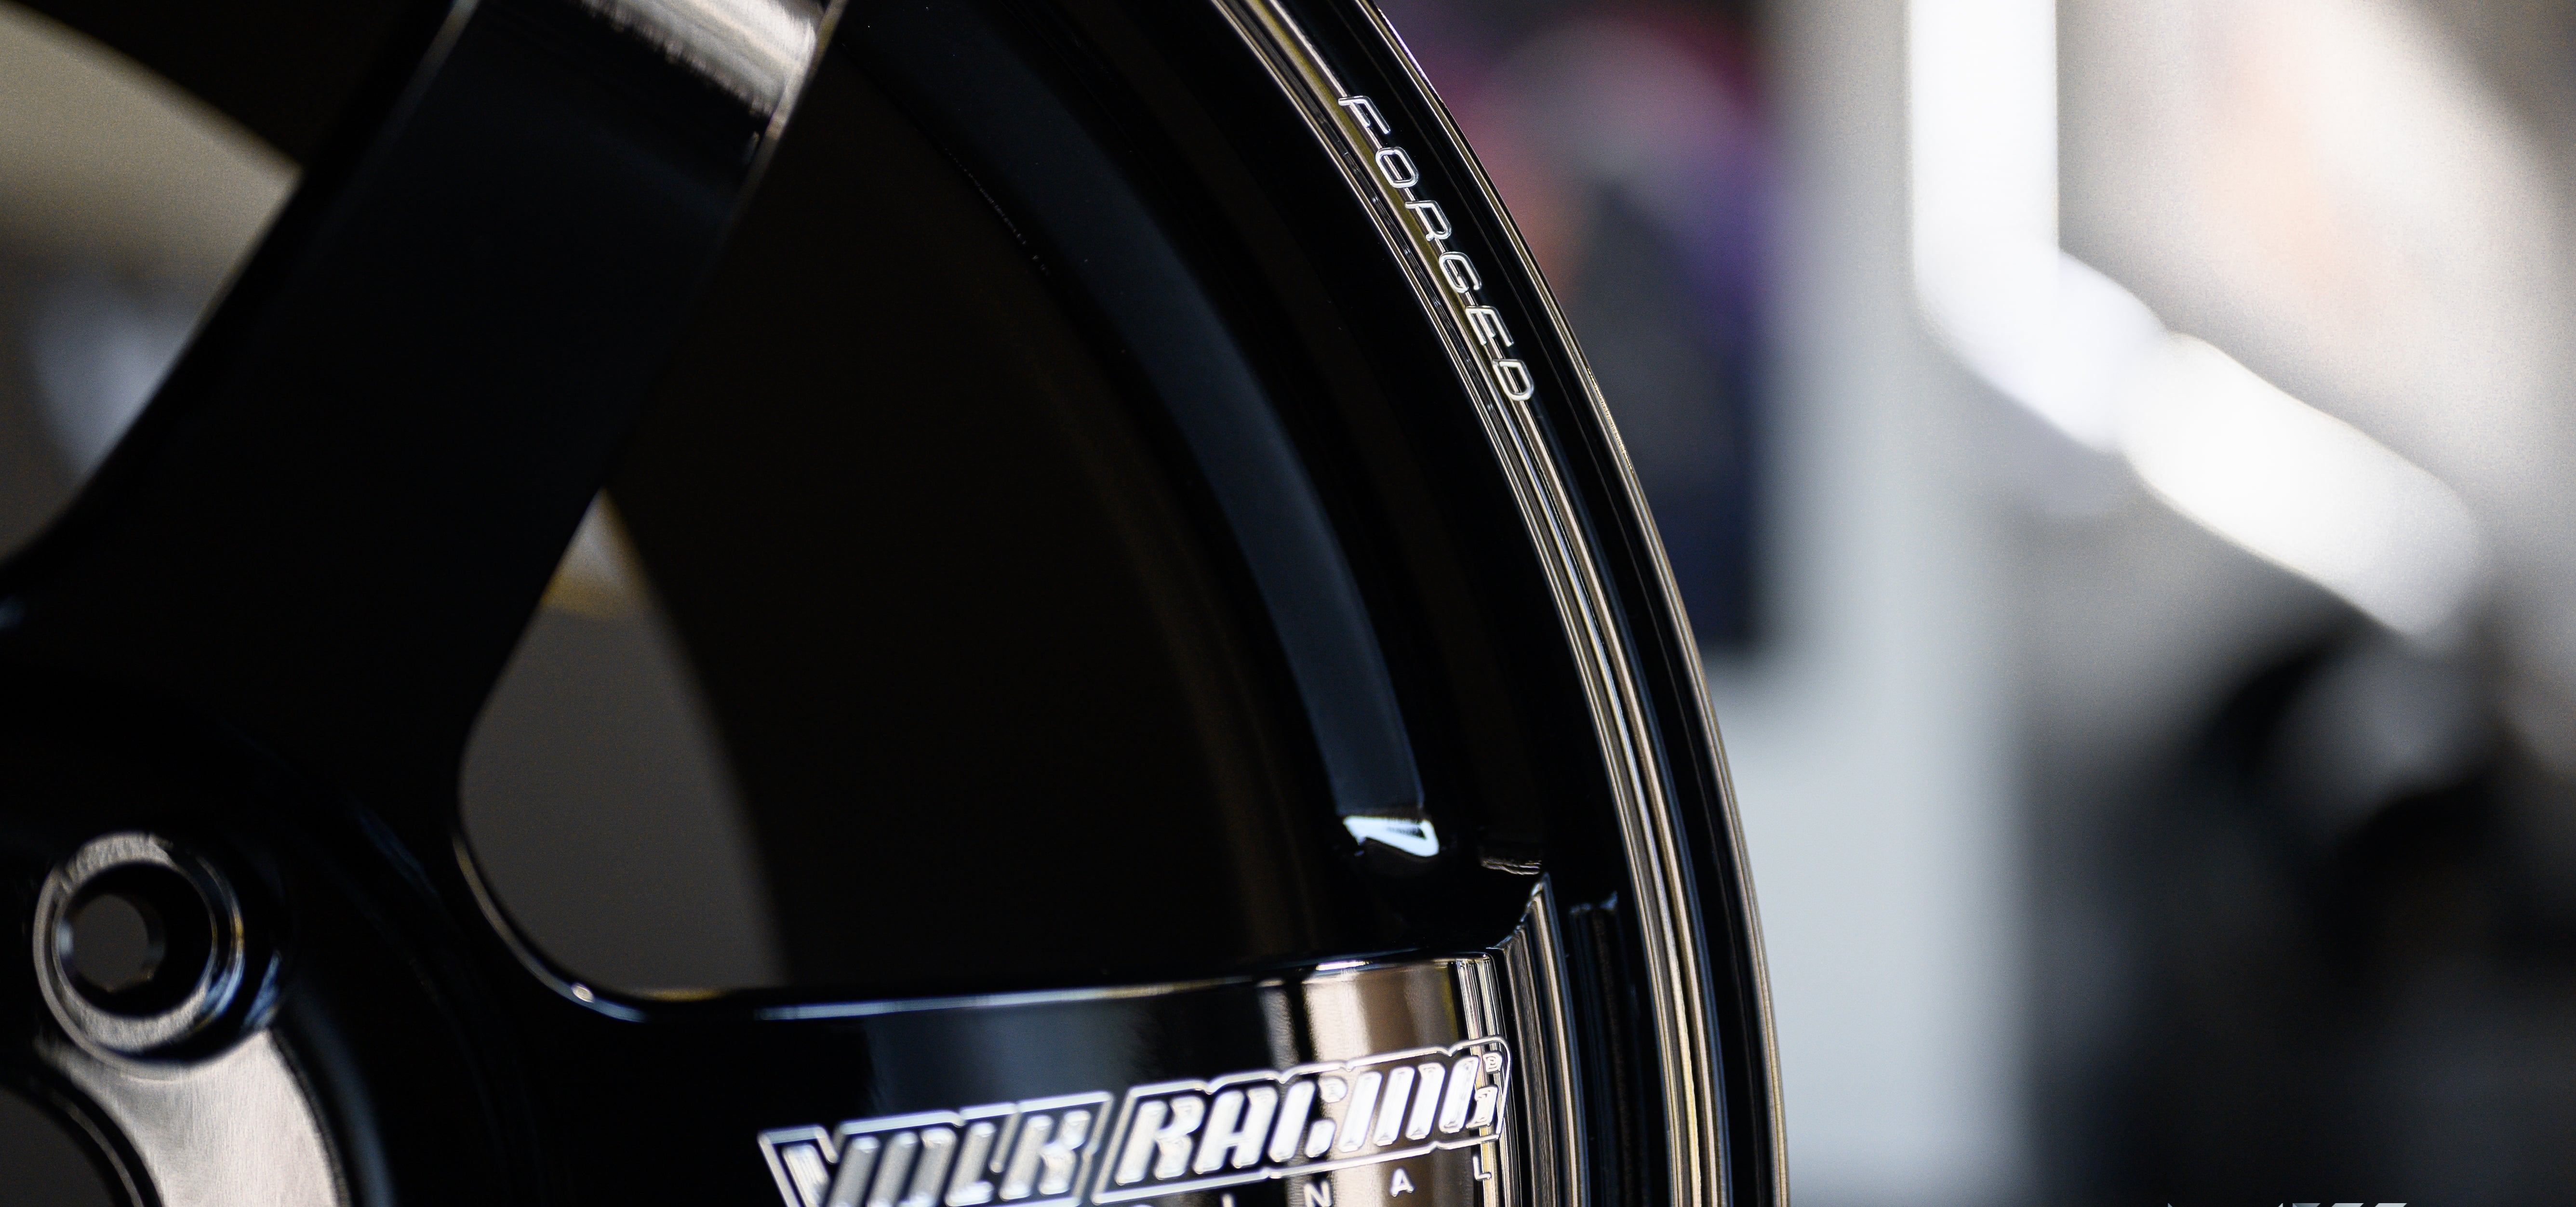 Volk Racing TE37 Saga S-Plus 17" - Premium Wheels from Volk Racing - From just $3550! Shop now at MK MOTORSPORTS